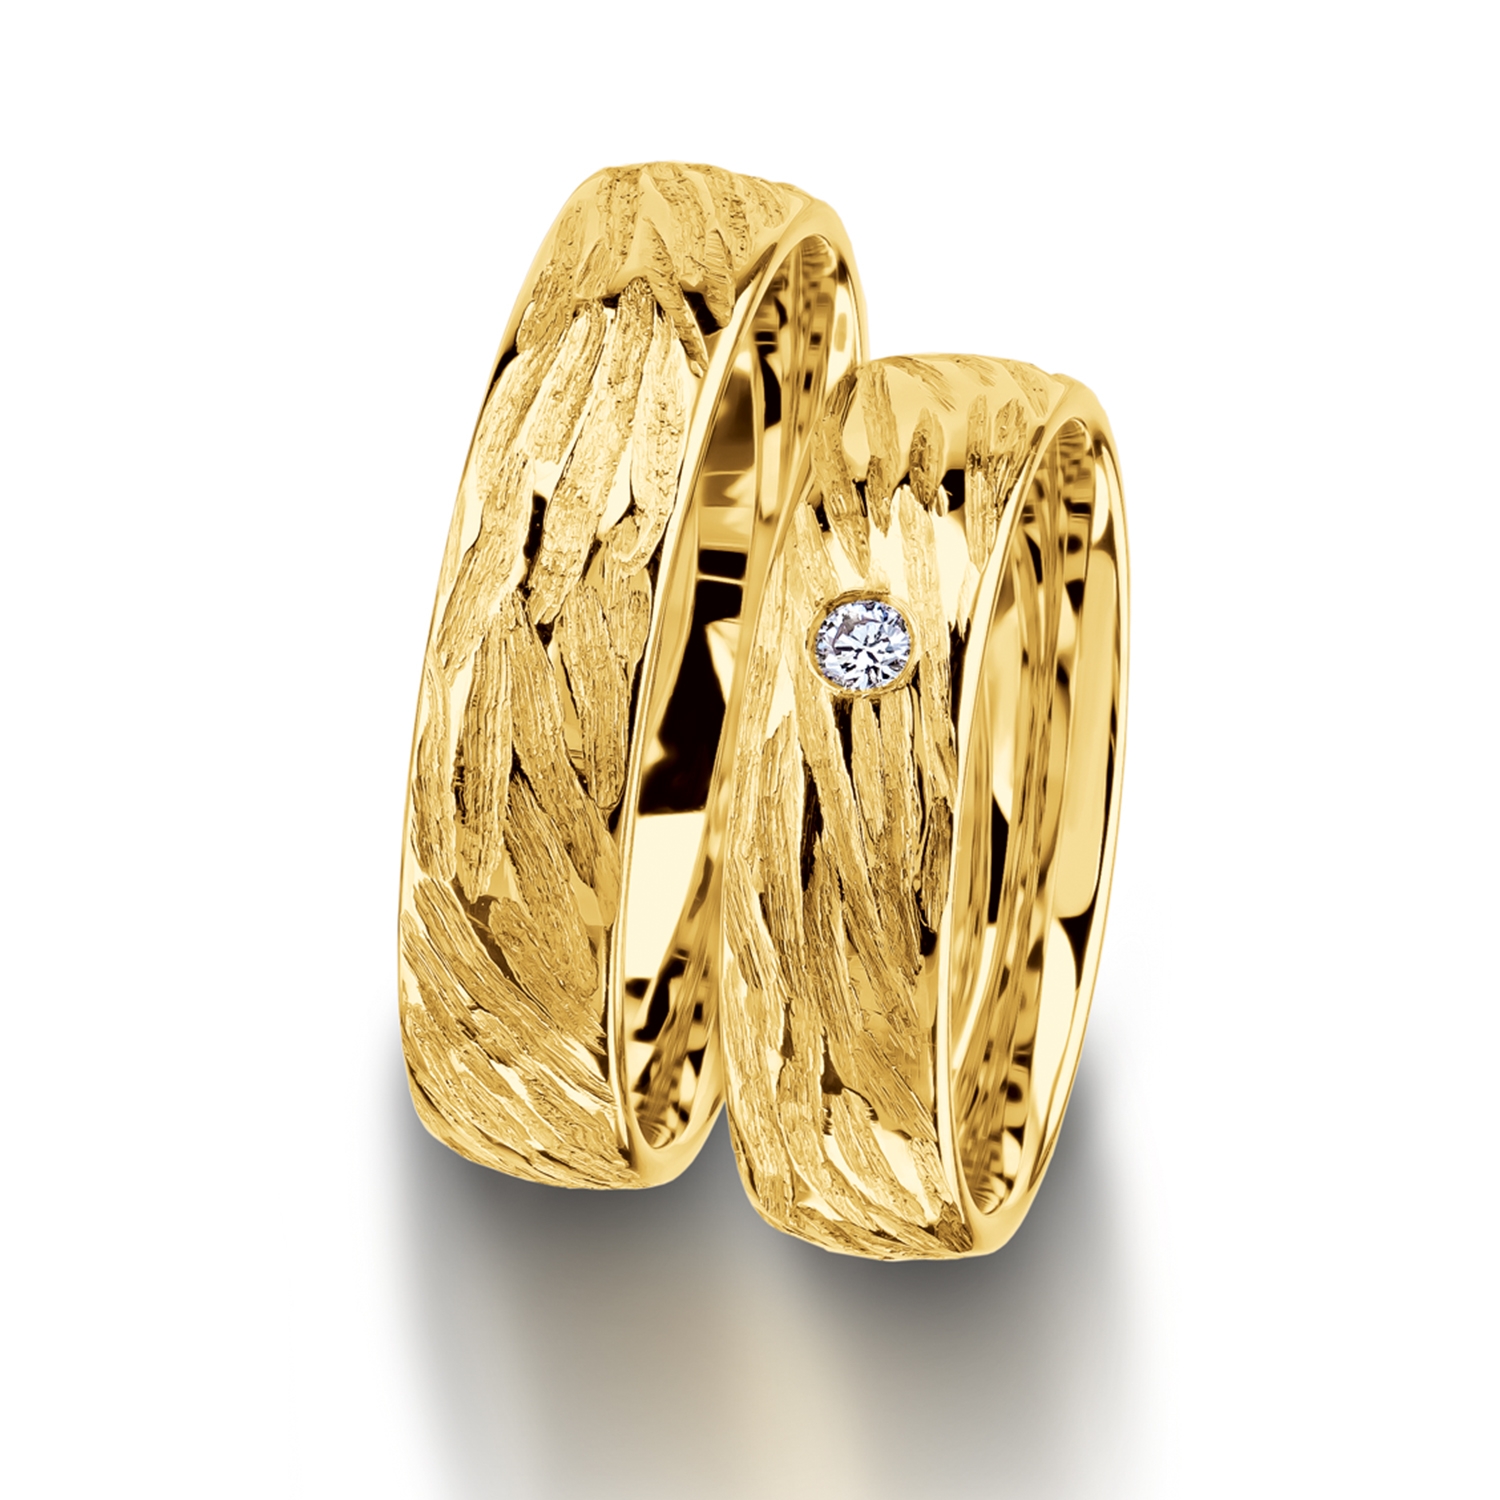 Rings in gold, platinum and palladium Furrer Jacot